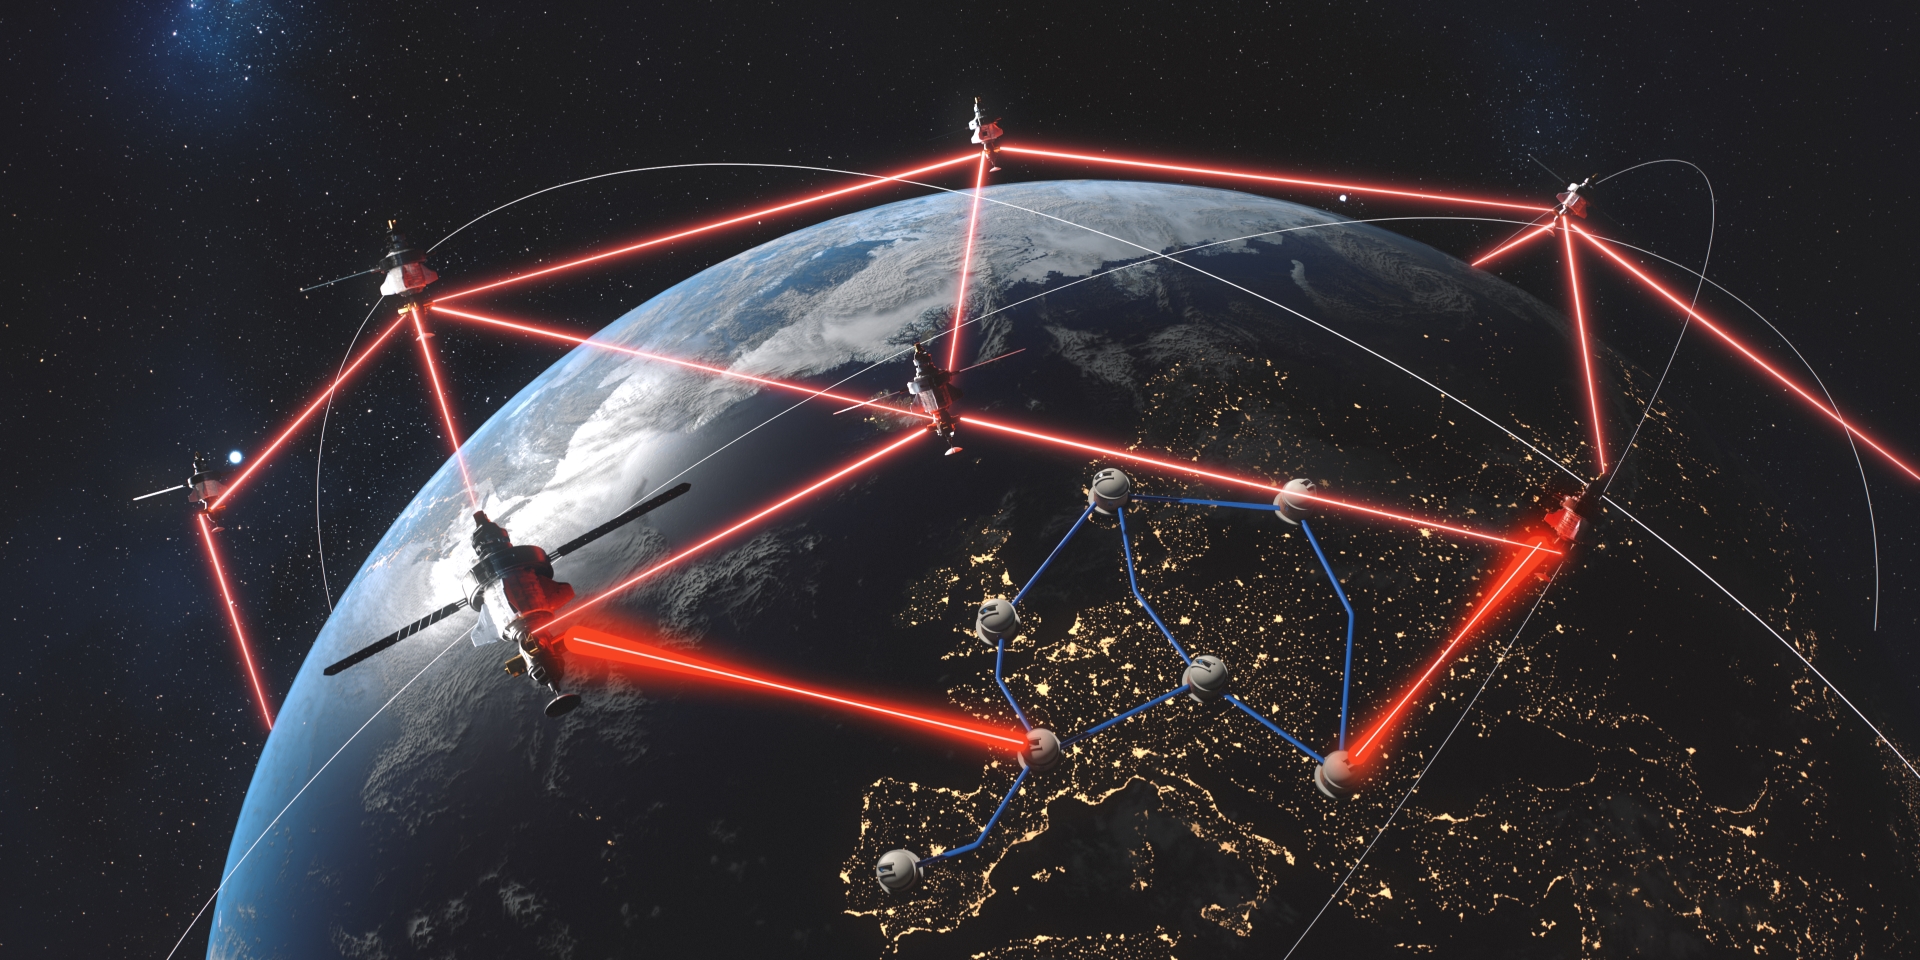 Lasers enable internet backbone via satellite